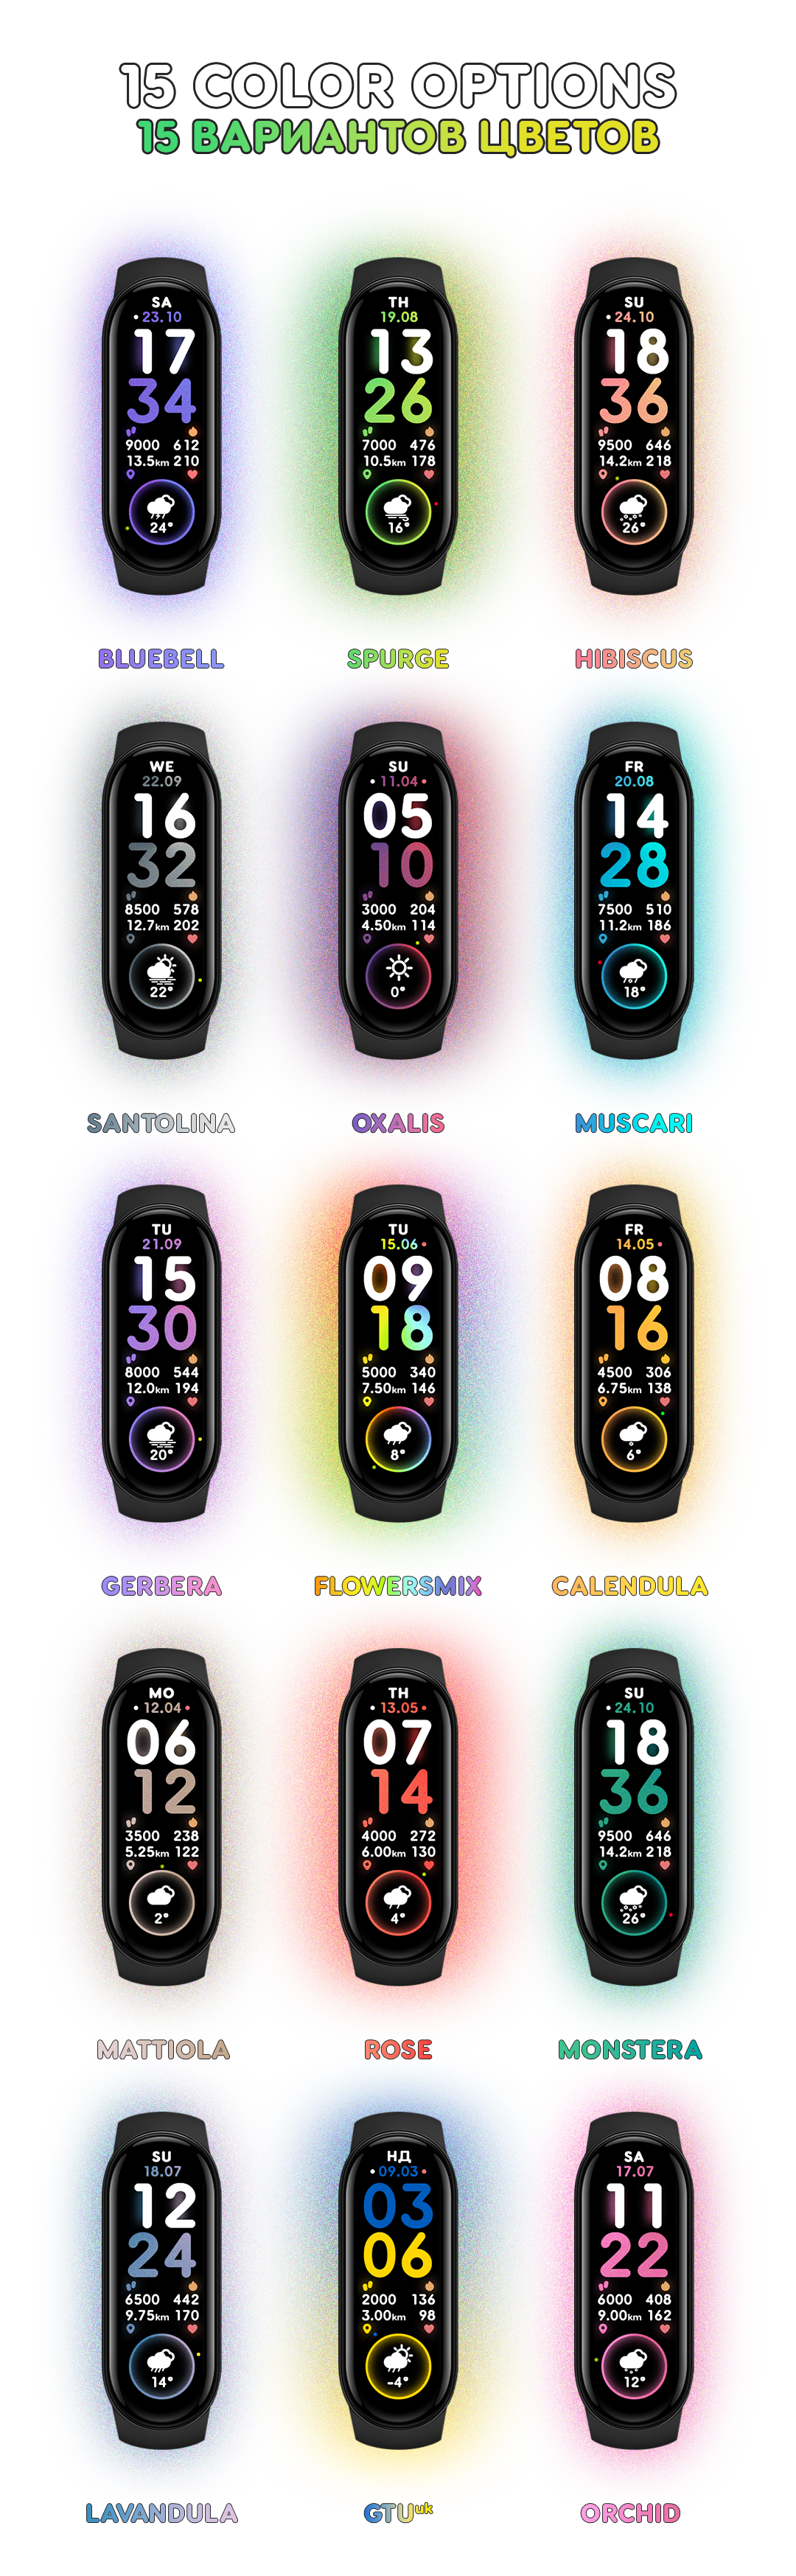 Chrome Dino Color Esp by AlbertRubio - Amazfit Bip  🇺🇦 AmazFit, Zepp,  Xiaomi, Haylou, Honor, Huawei Watch faces catalog